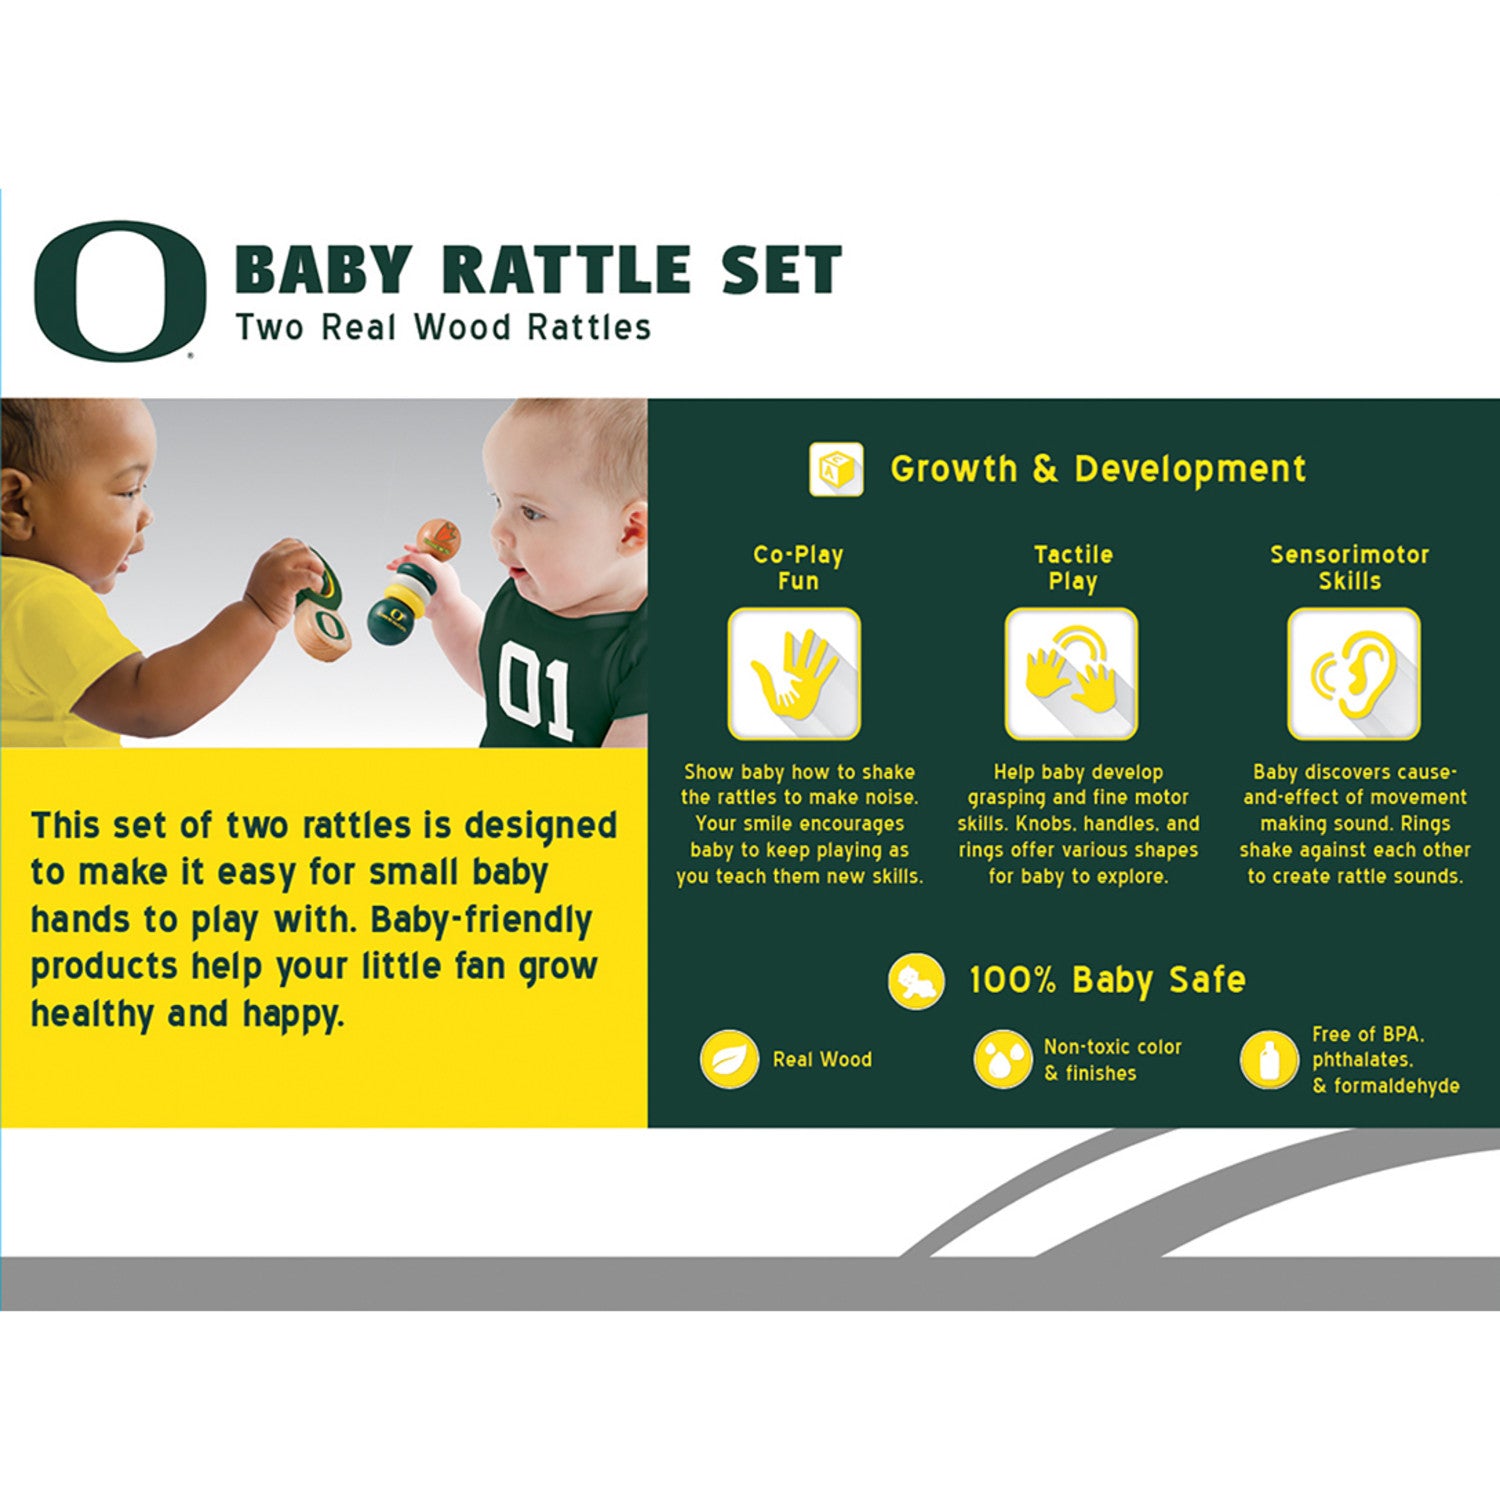 Oregon Ducks - Baby Rattles 2-Pack